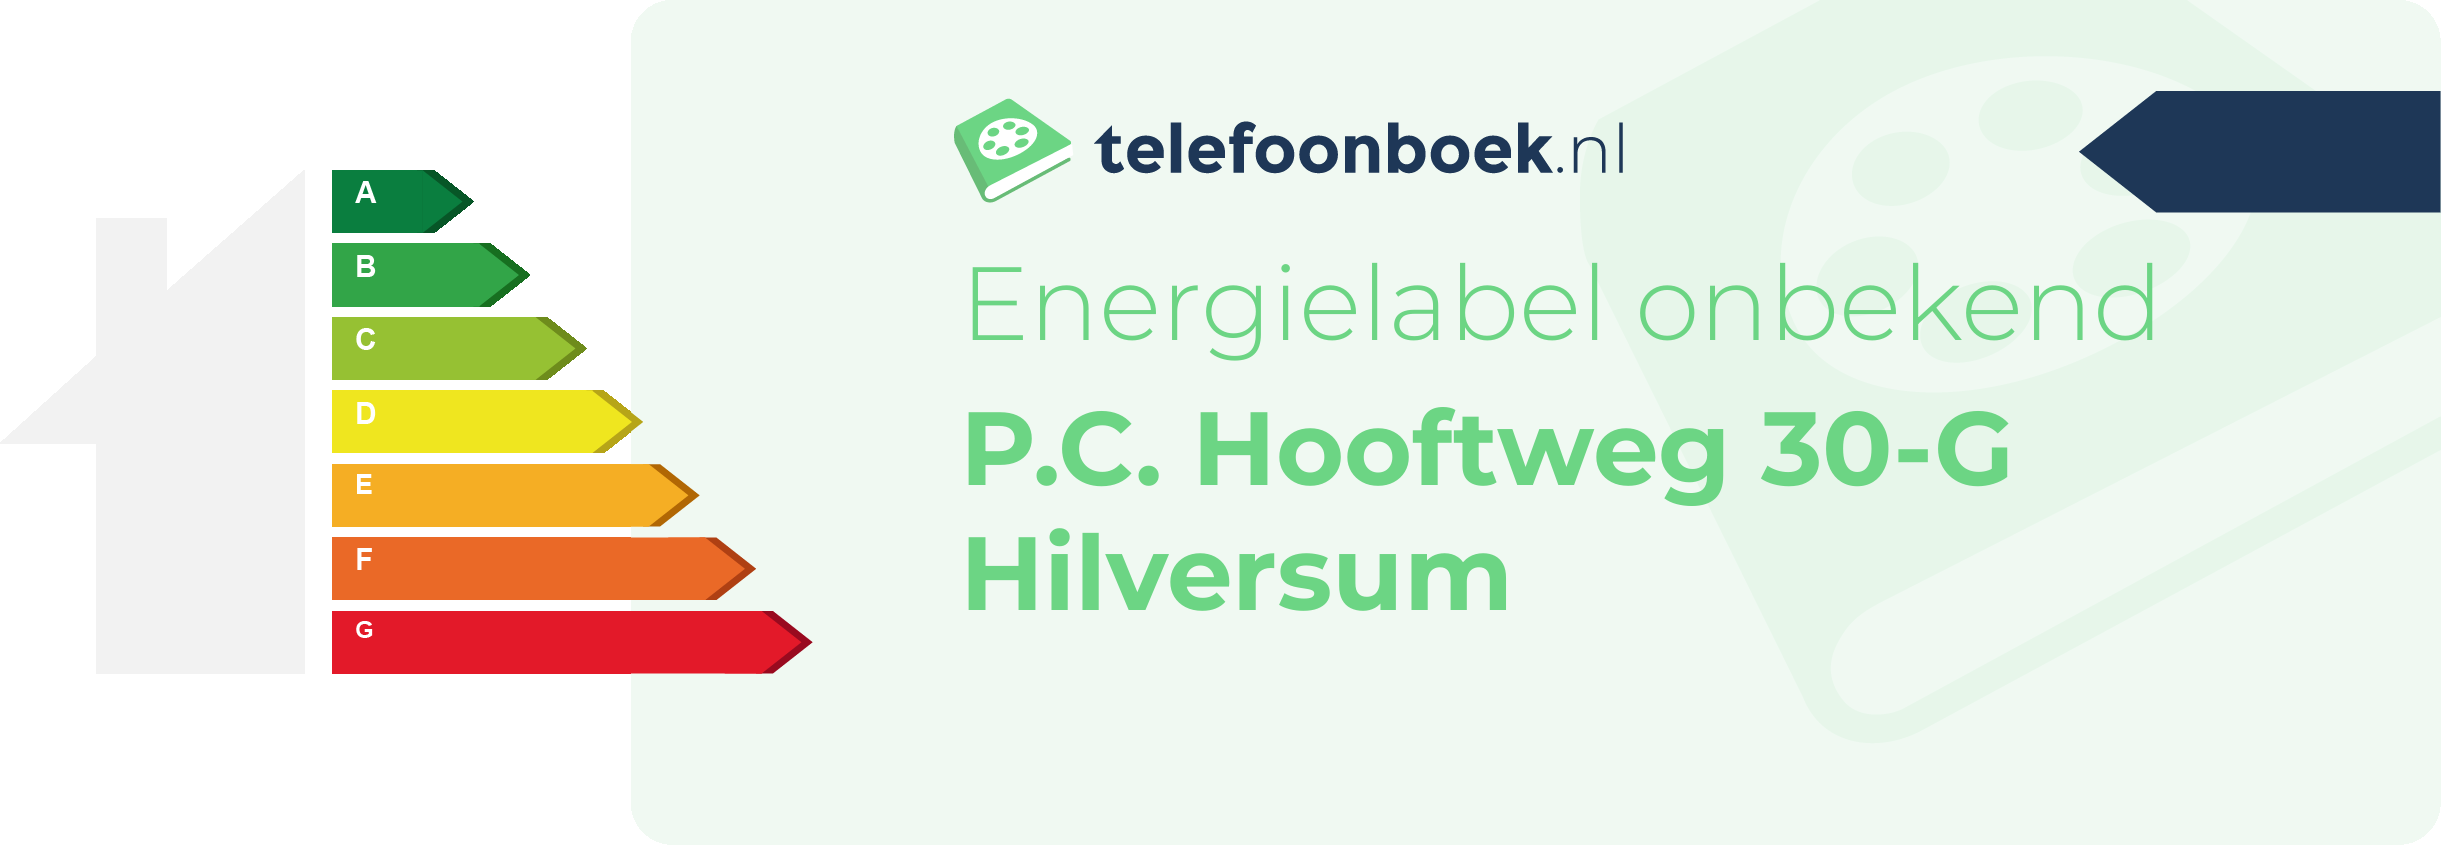 Energielabel P.C. Hooftweg 30-G Hilversum